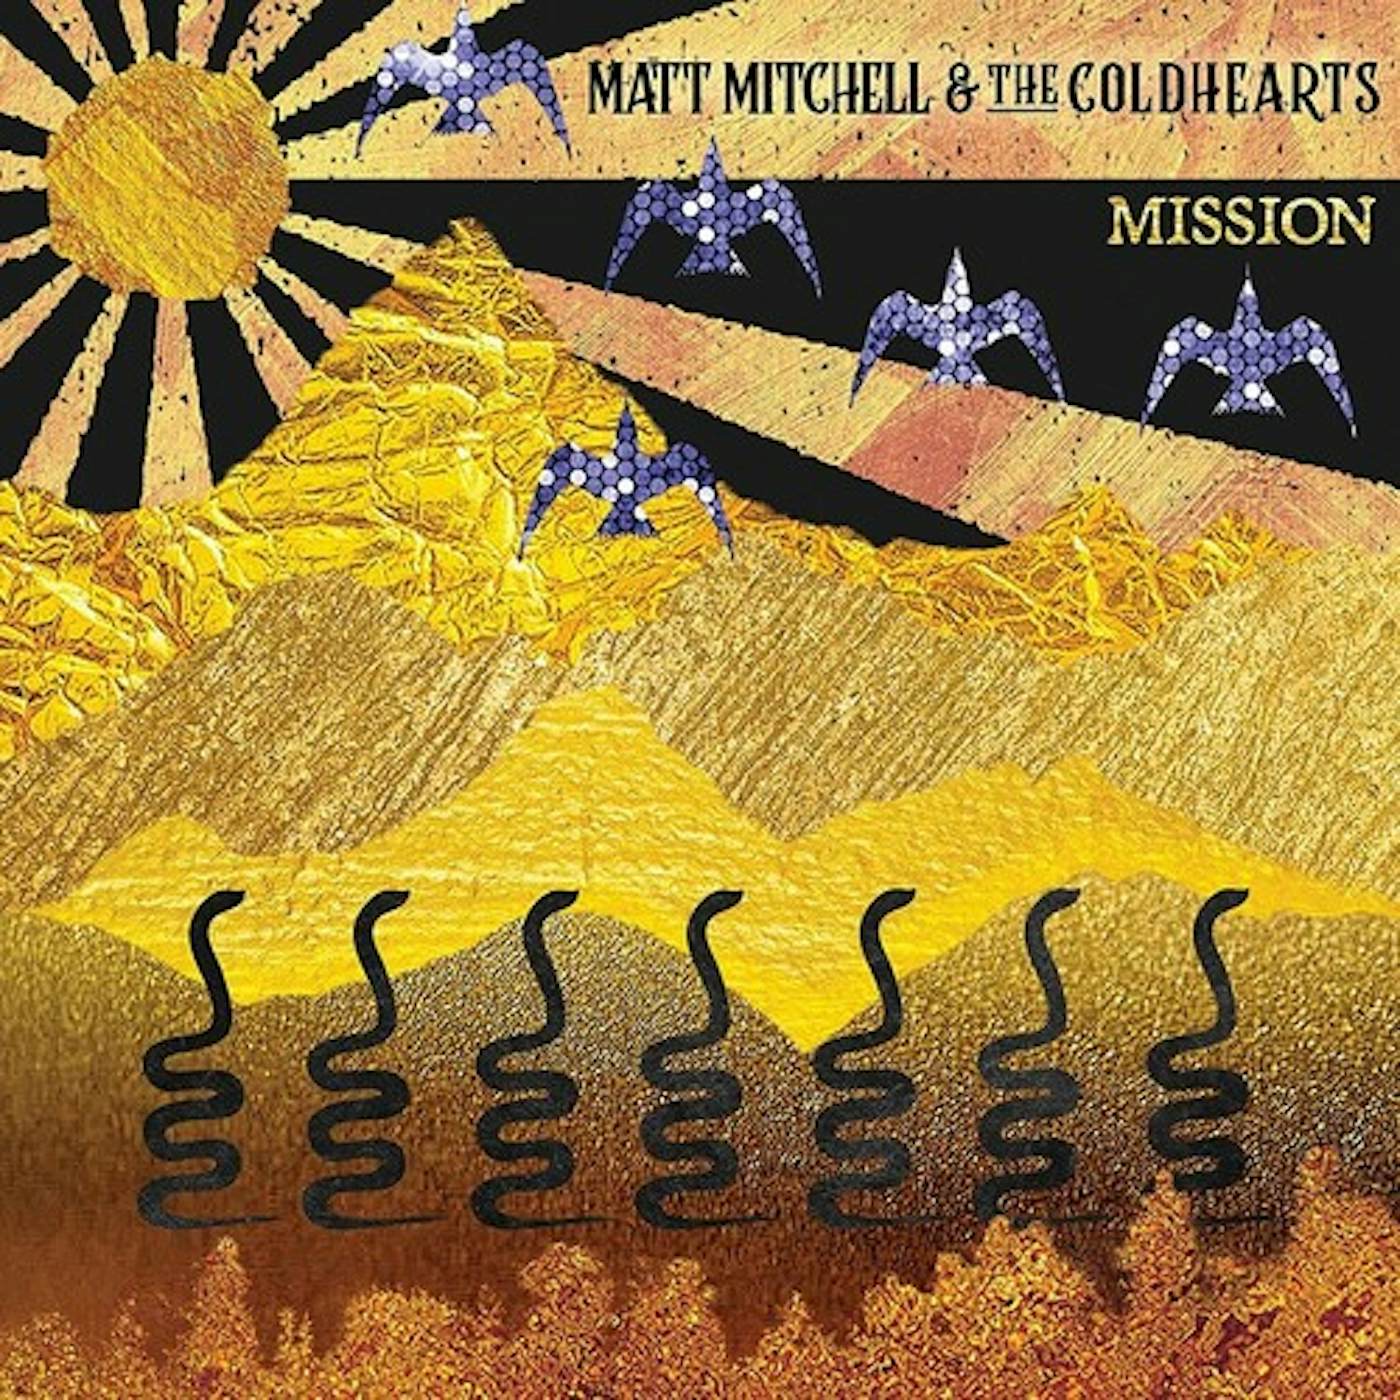 Matt Mitchell & the Coldhearts Mission Vinyl Record